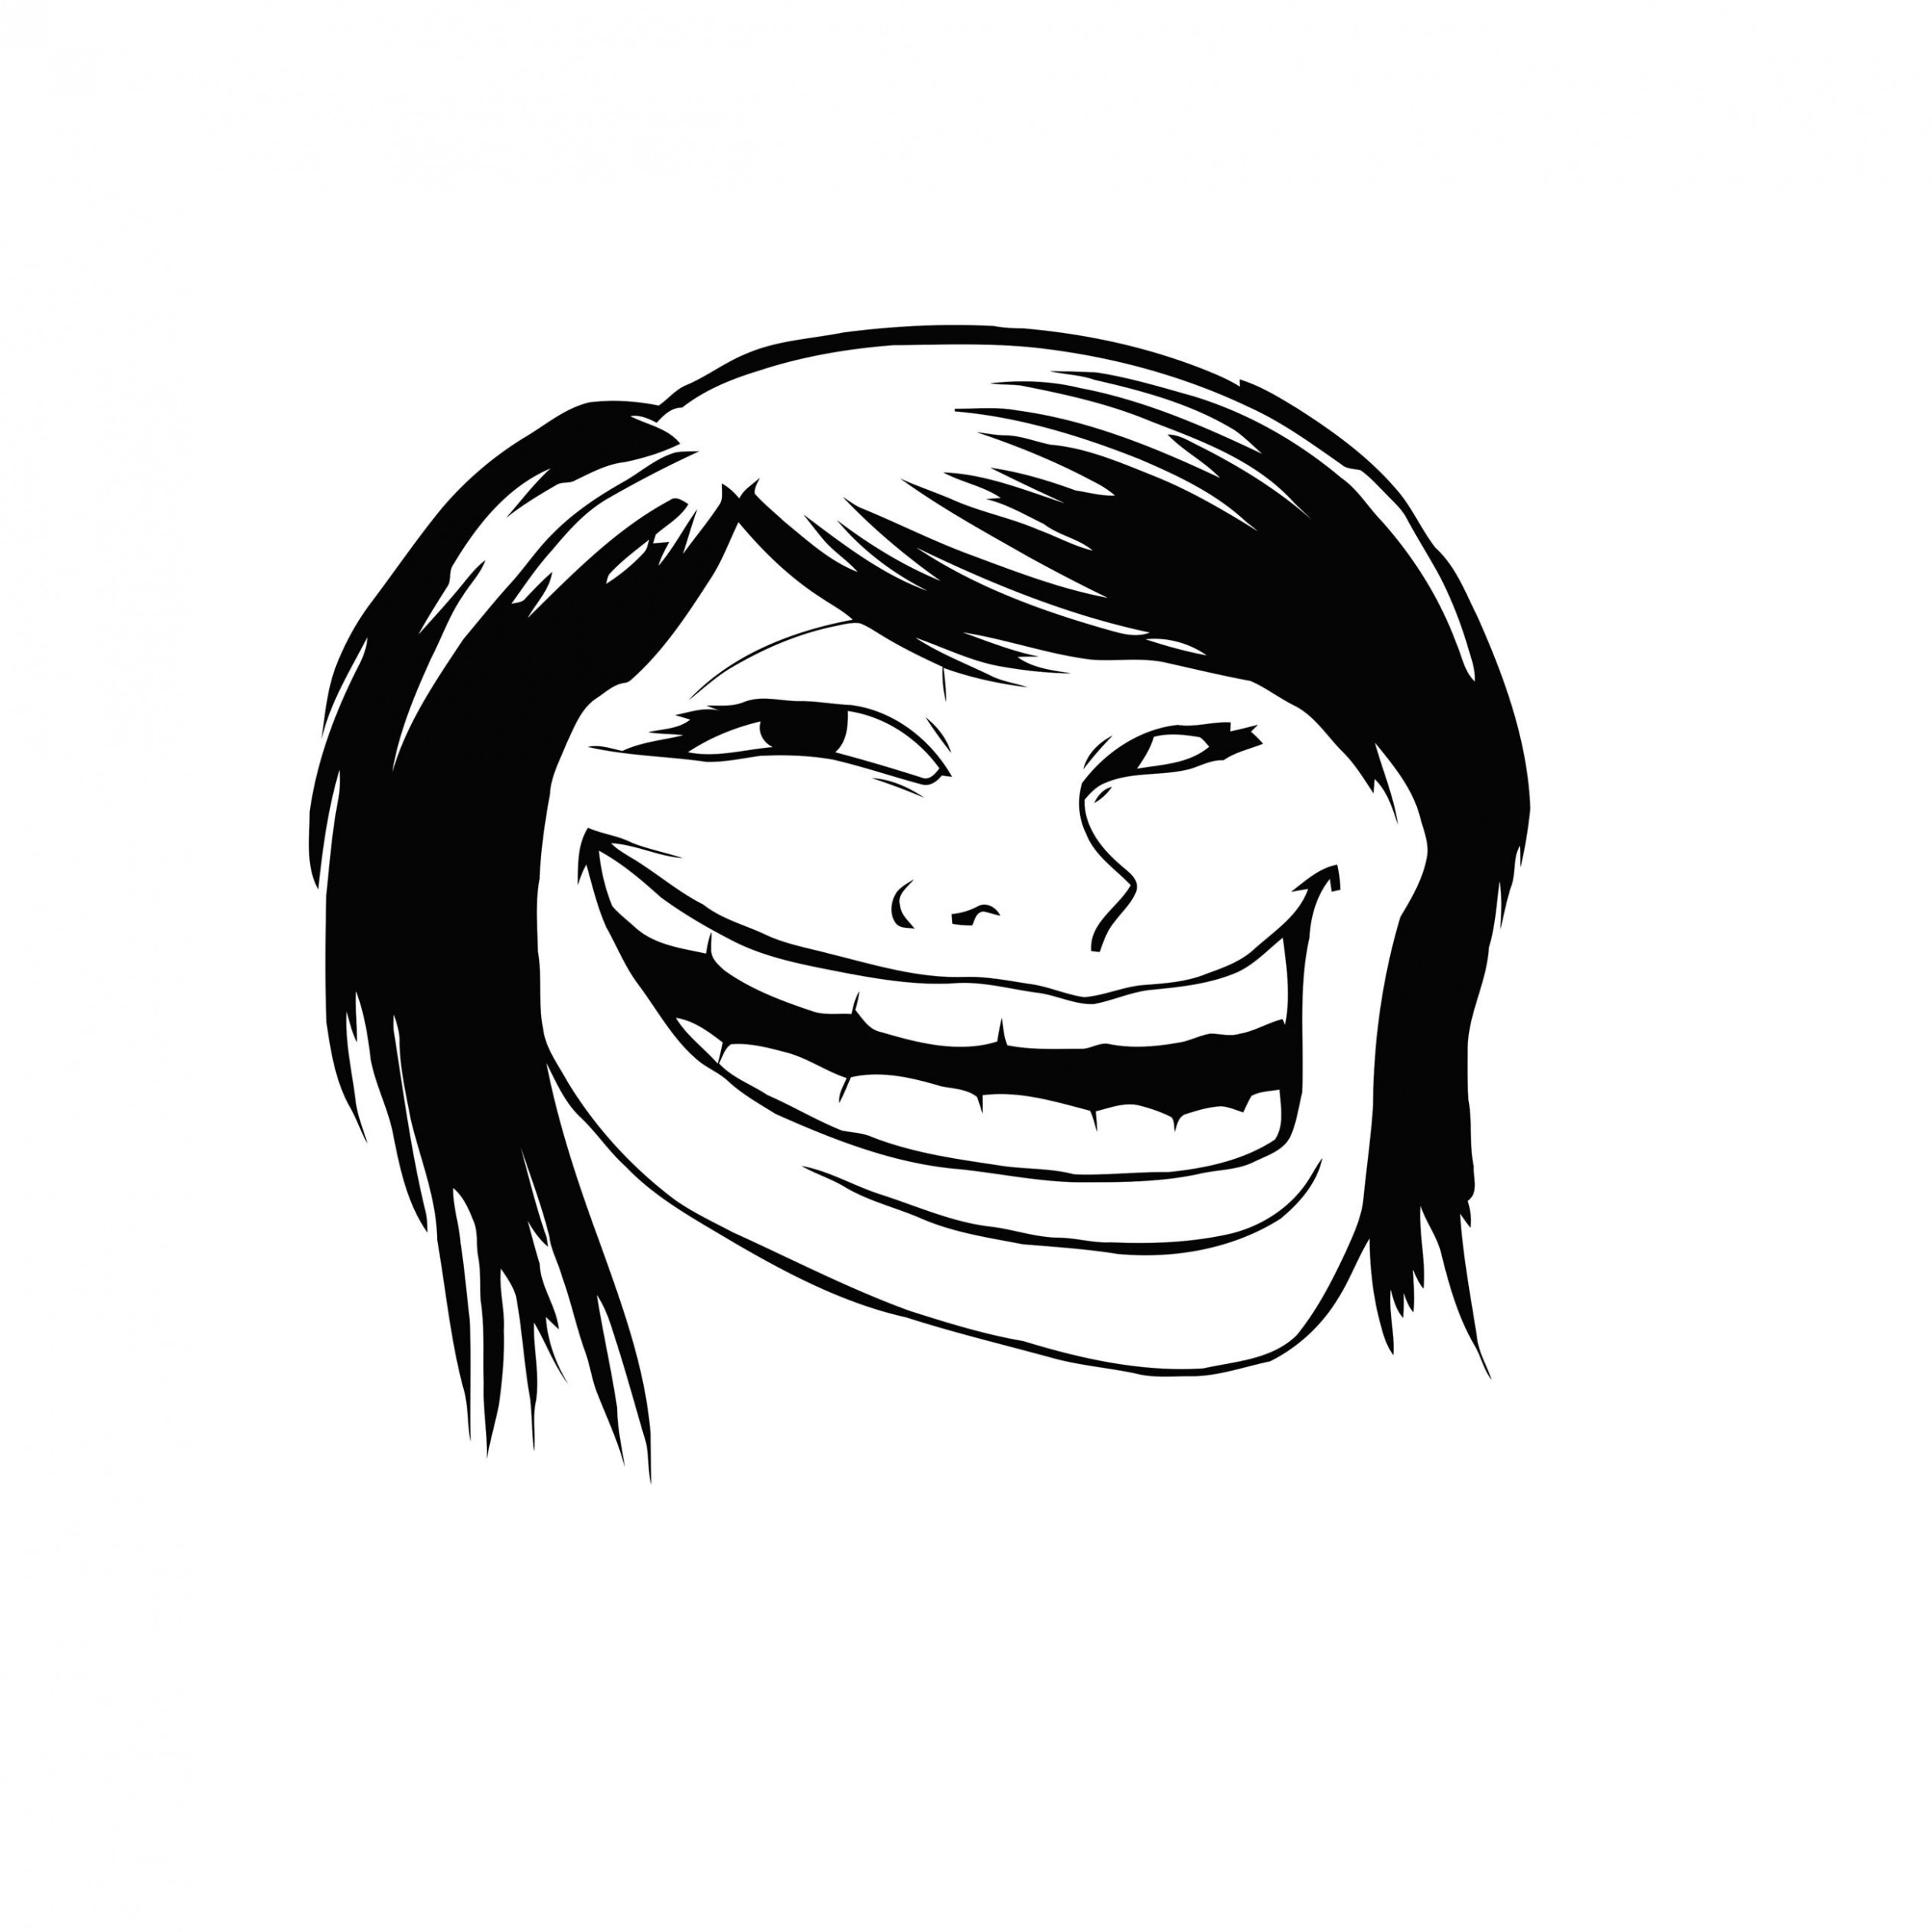 Female Troll Face Meme Wallpaper for Apple iPad Air